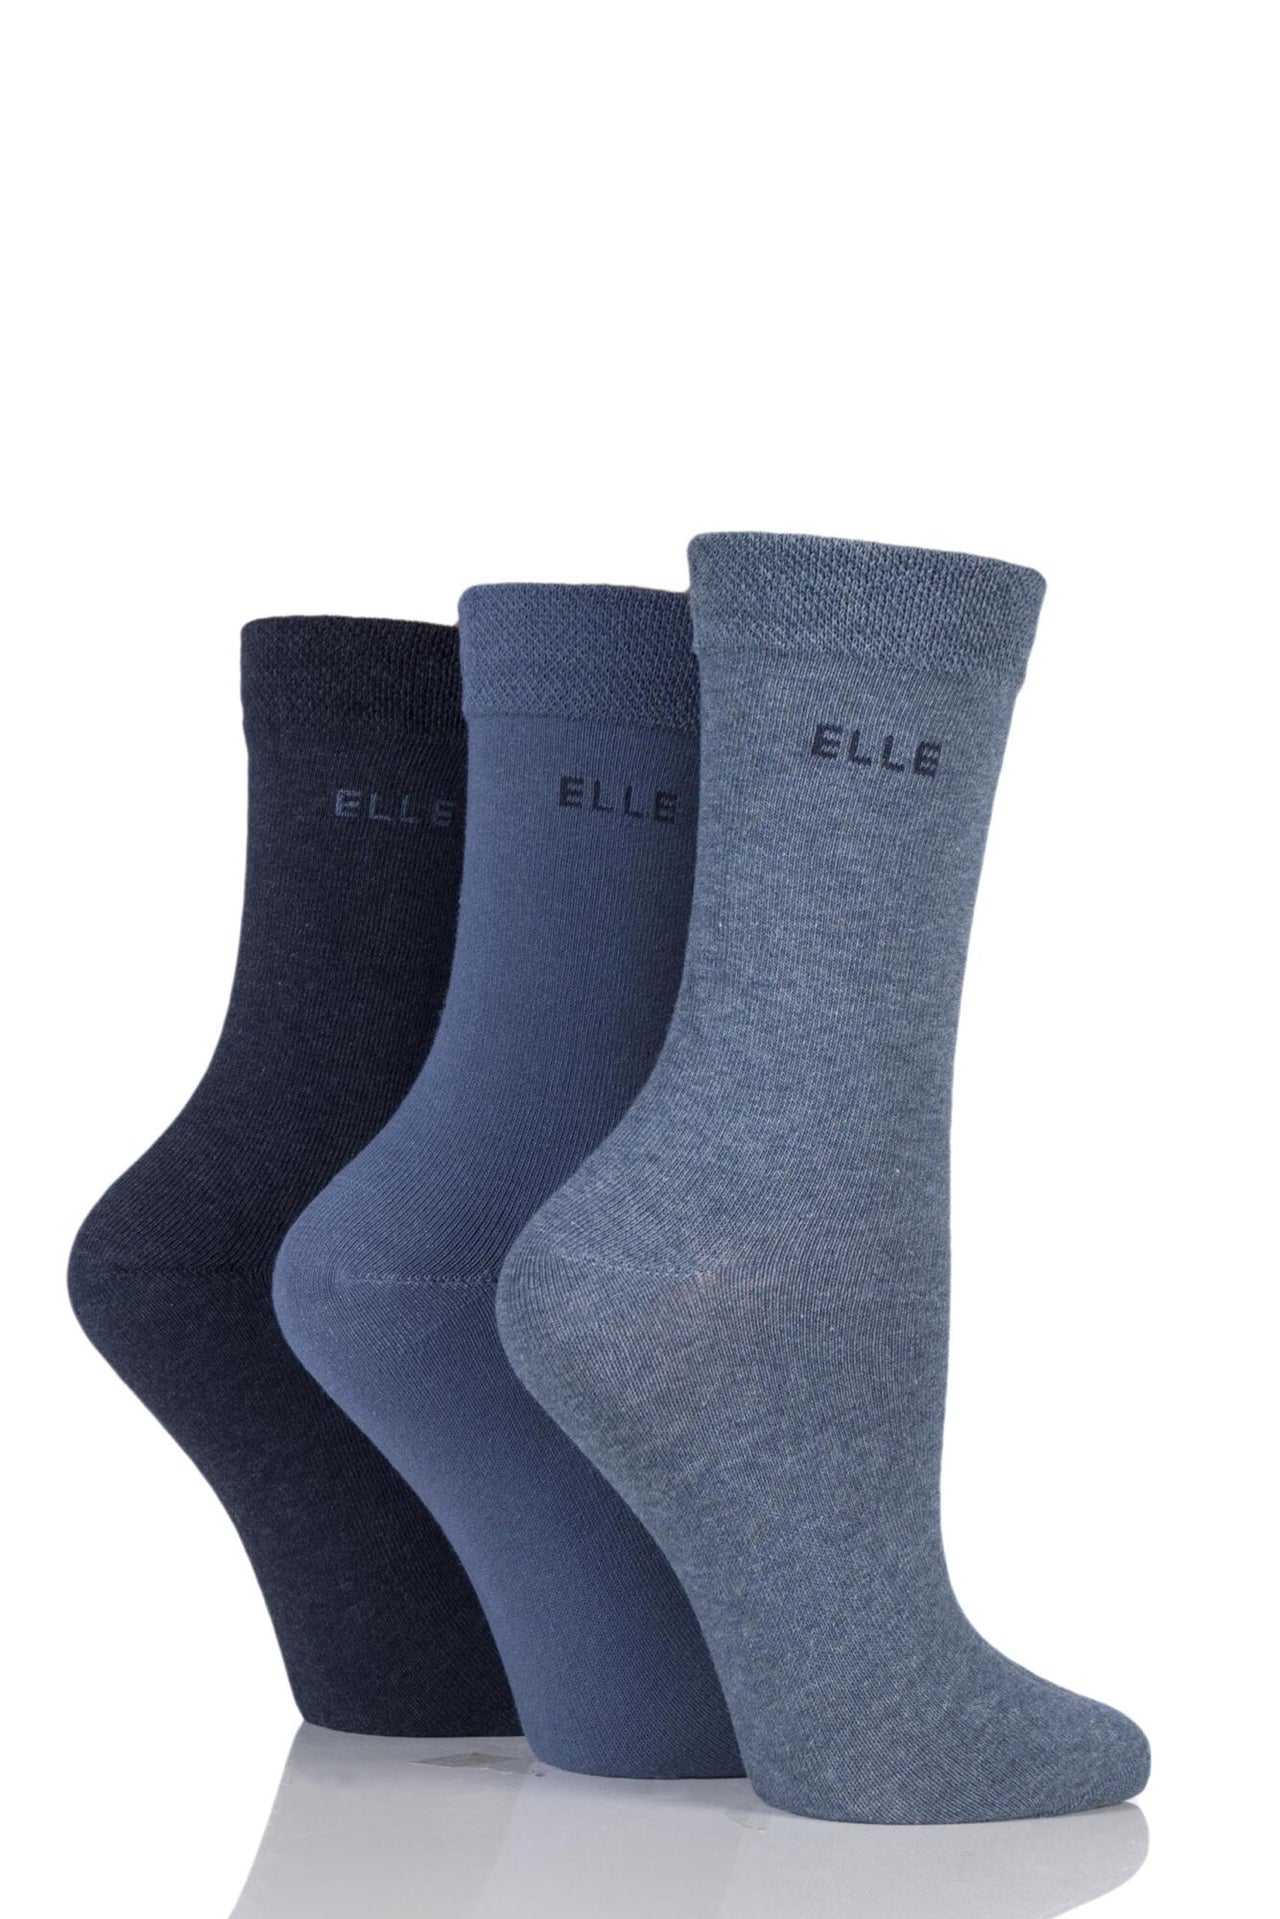 Elle 3 Pairs of Combed Cotton Denim Mix Socks